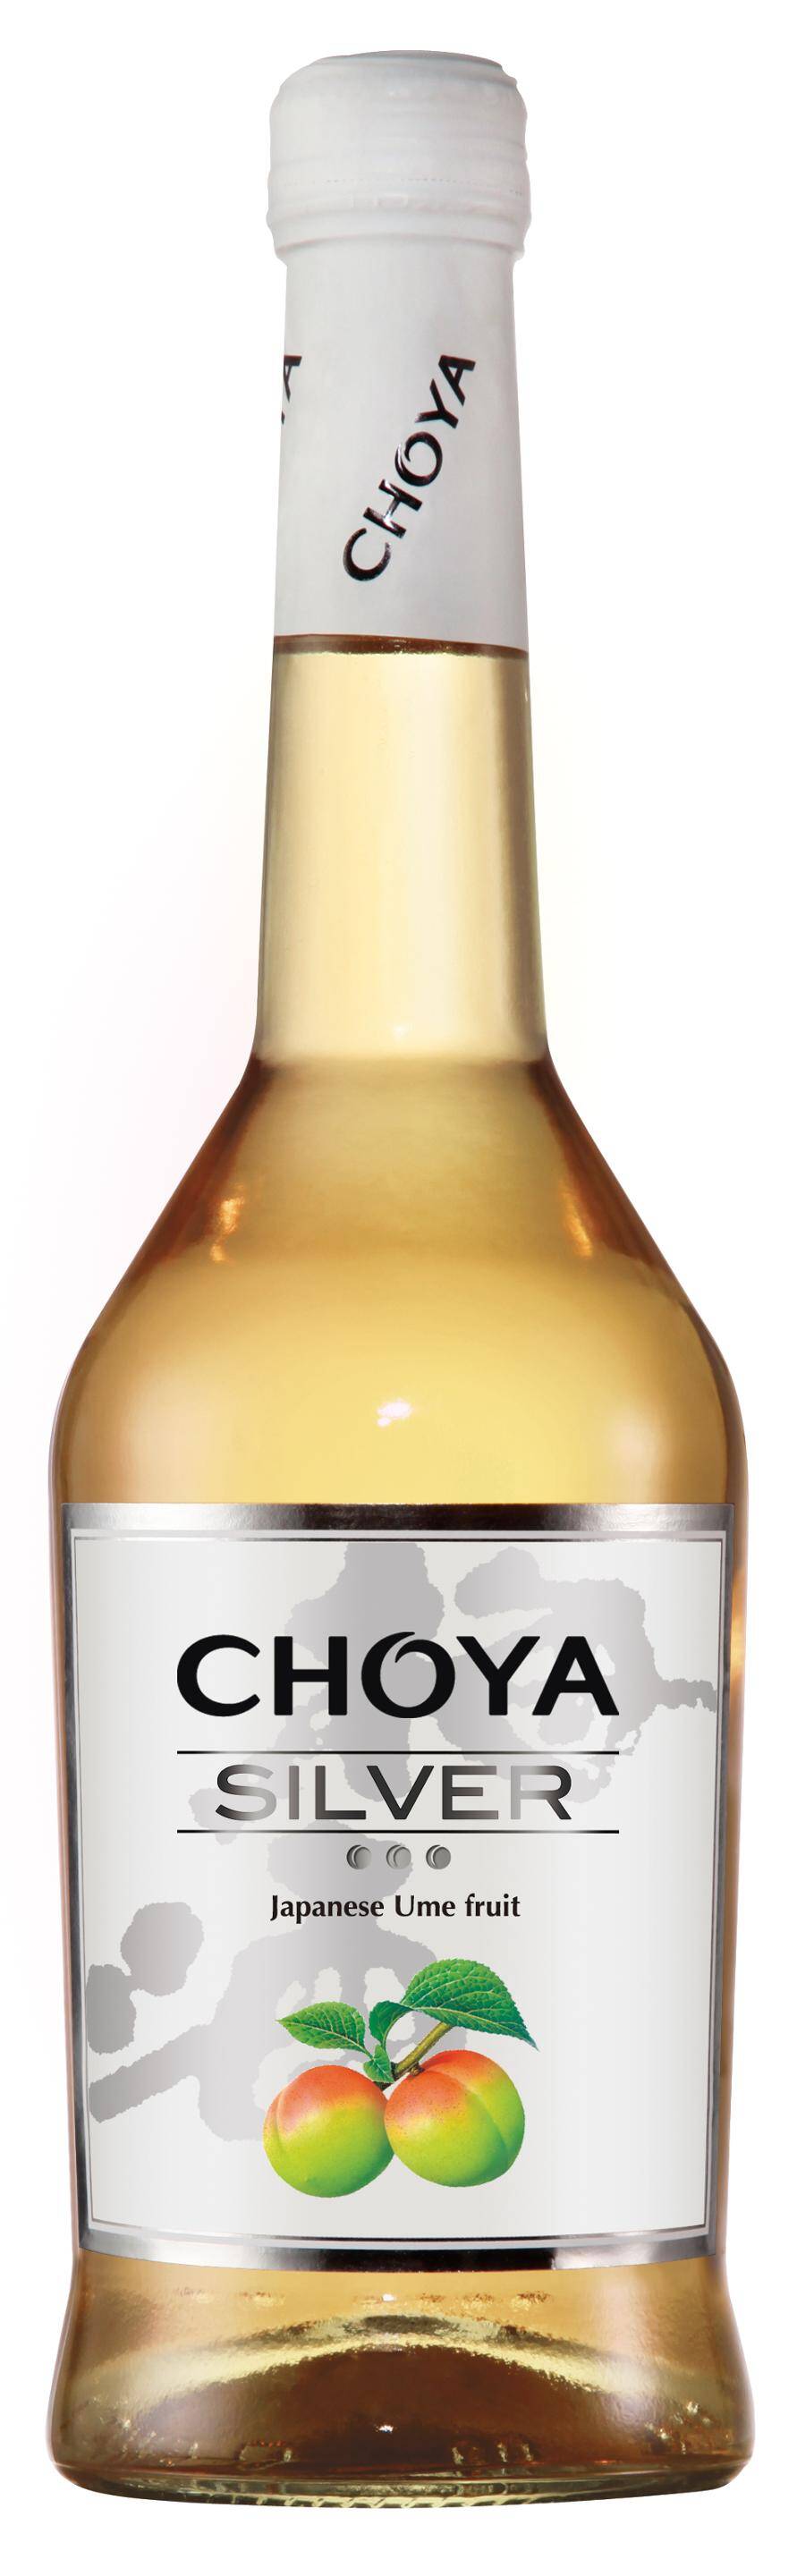 Choya Silver 10%, 500ml/6 e